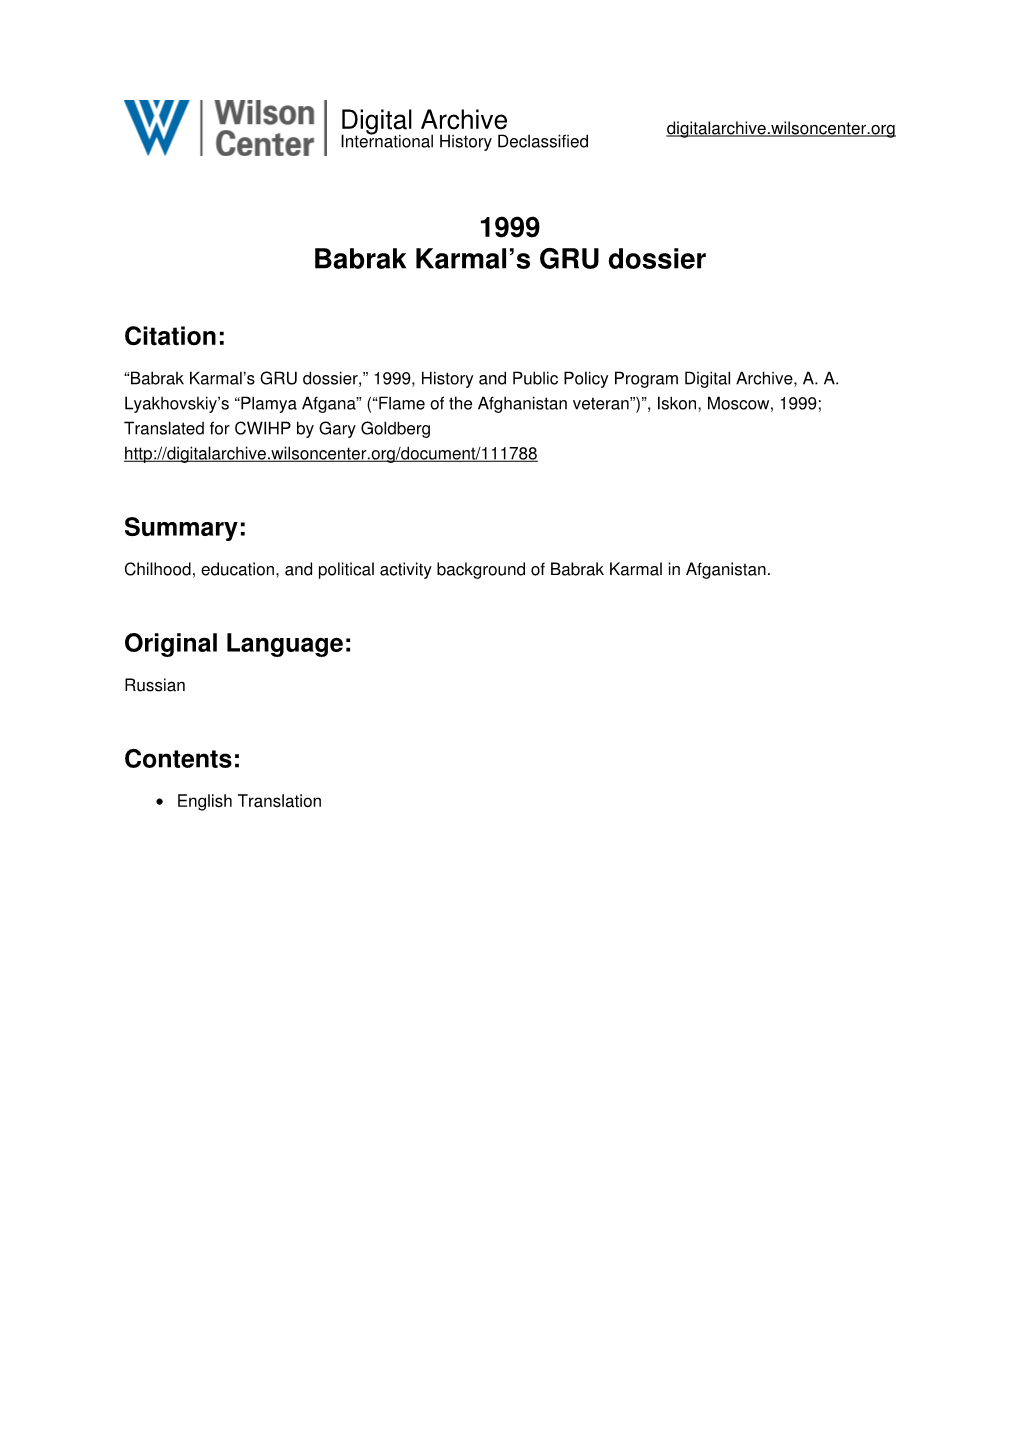 1999 Babrak Karmal's GRU Dossier